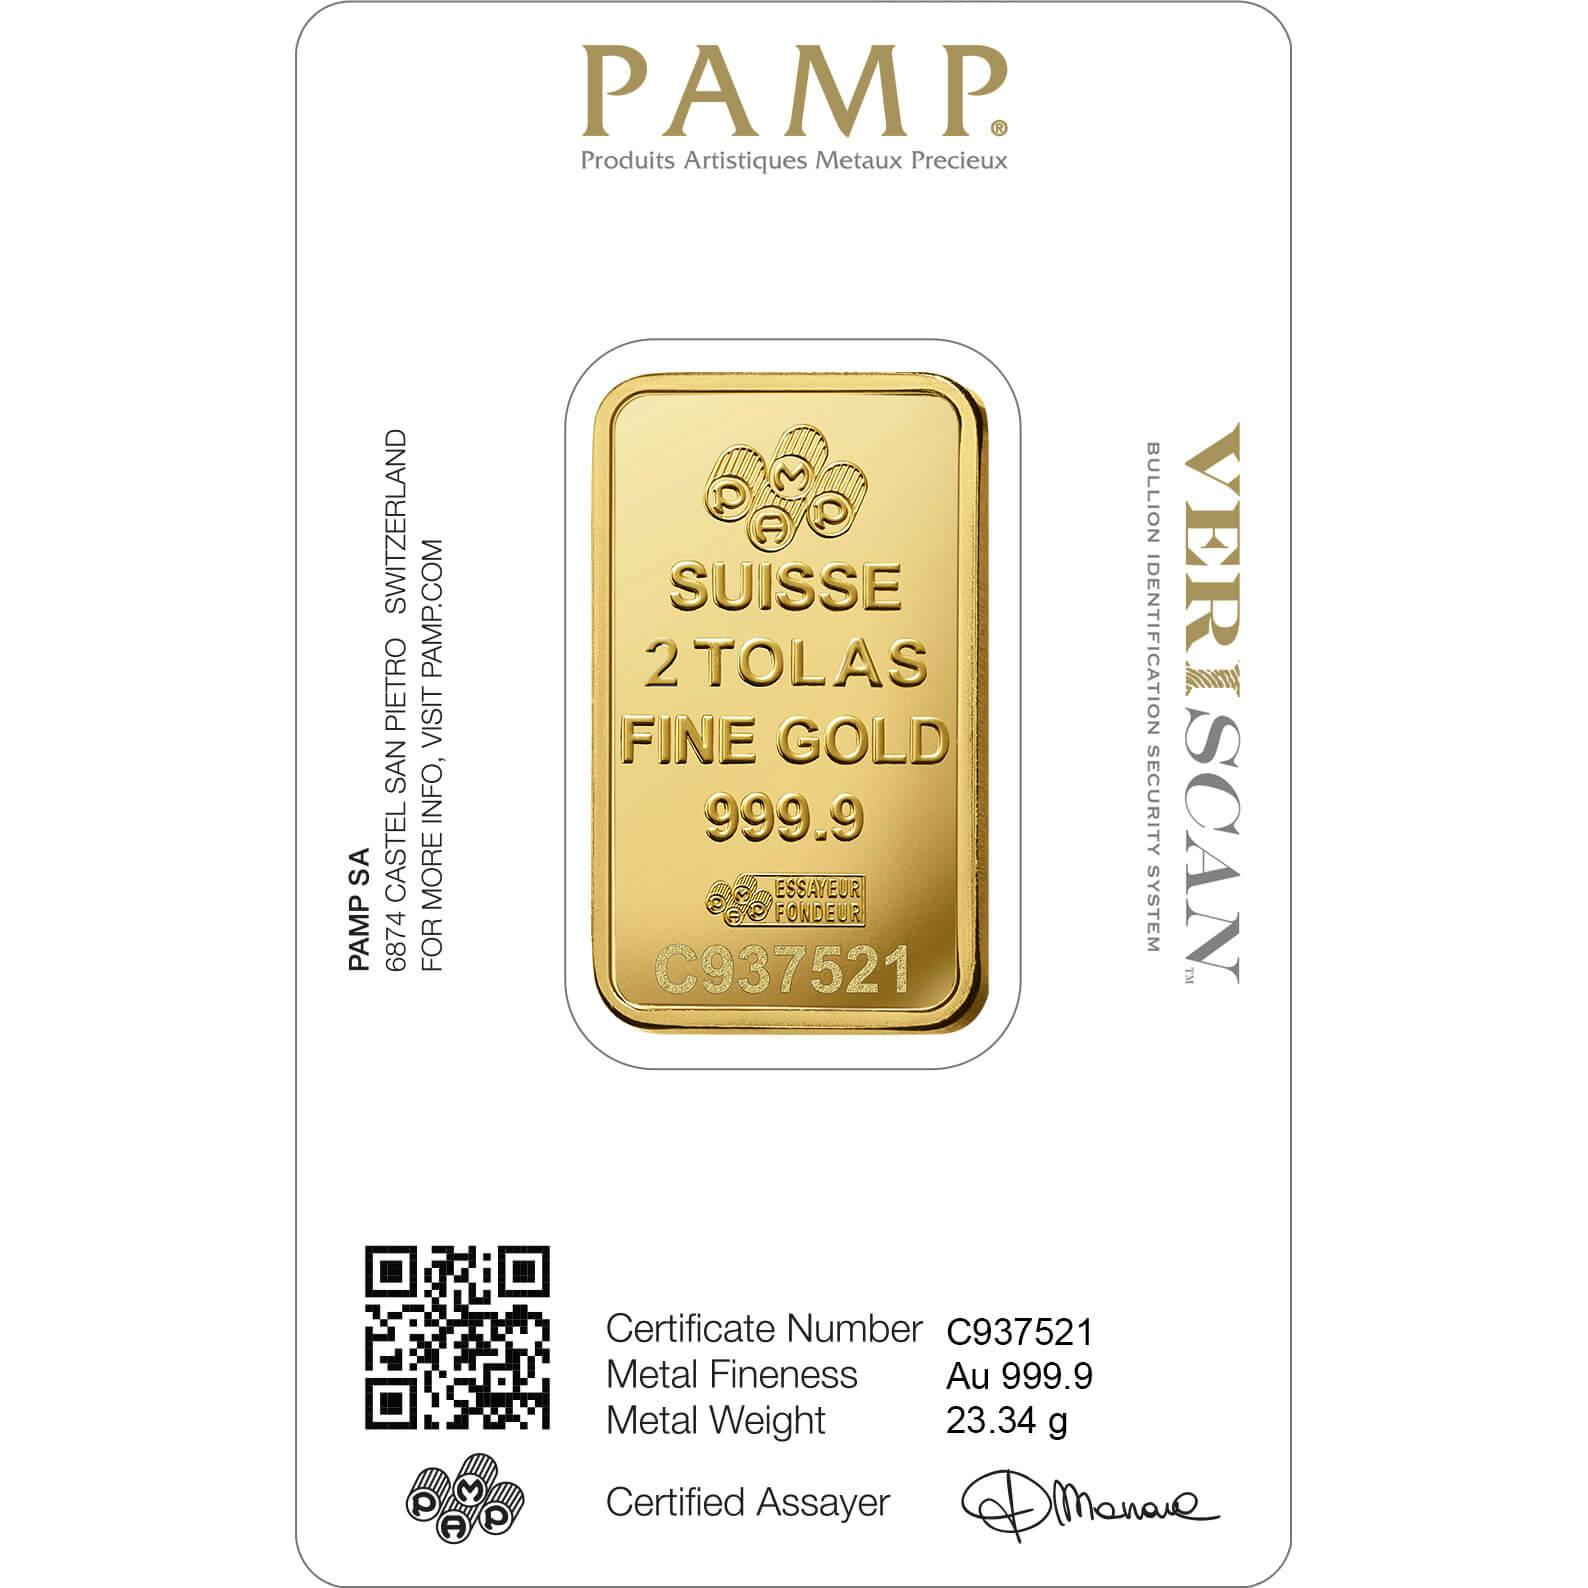 investir dans 2 tolas d'or pur Lady Fortuna - PAMP Suisse - Pack Veriscan